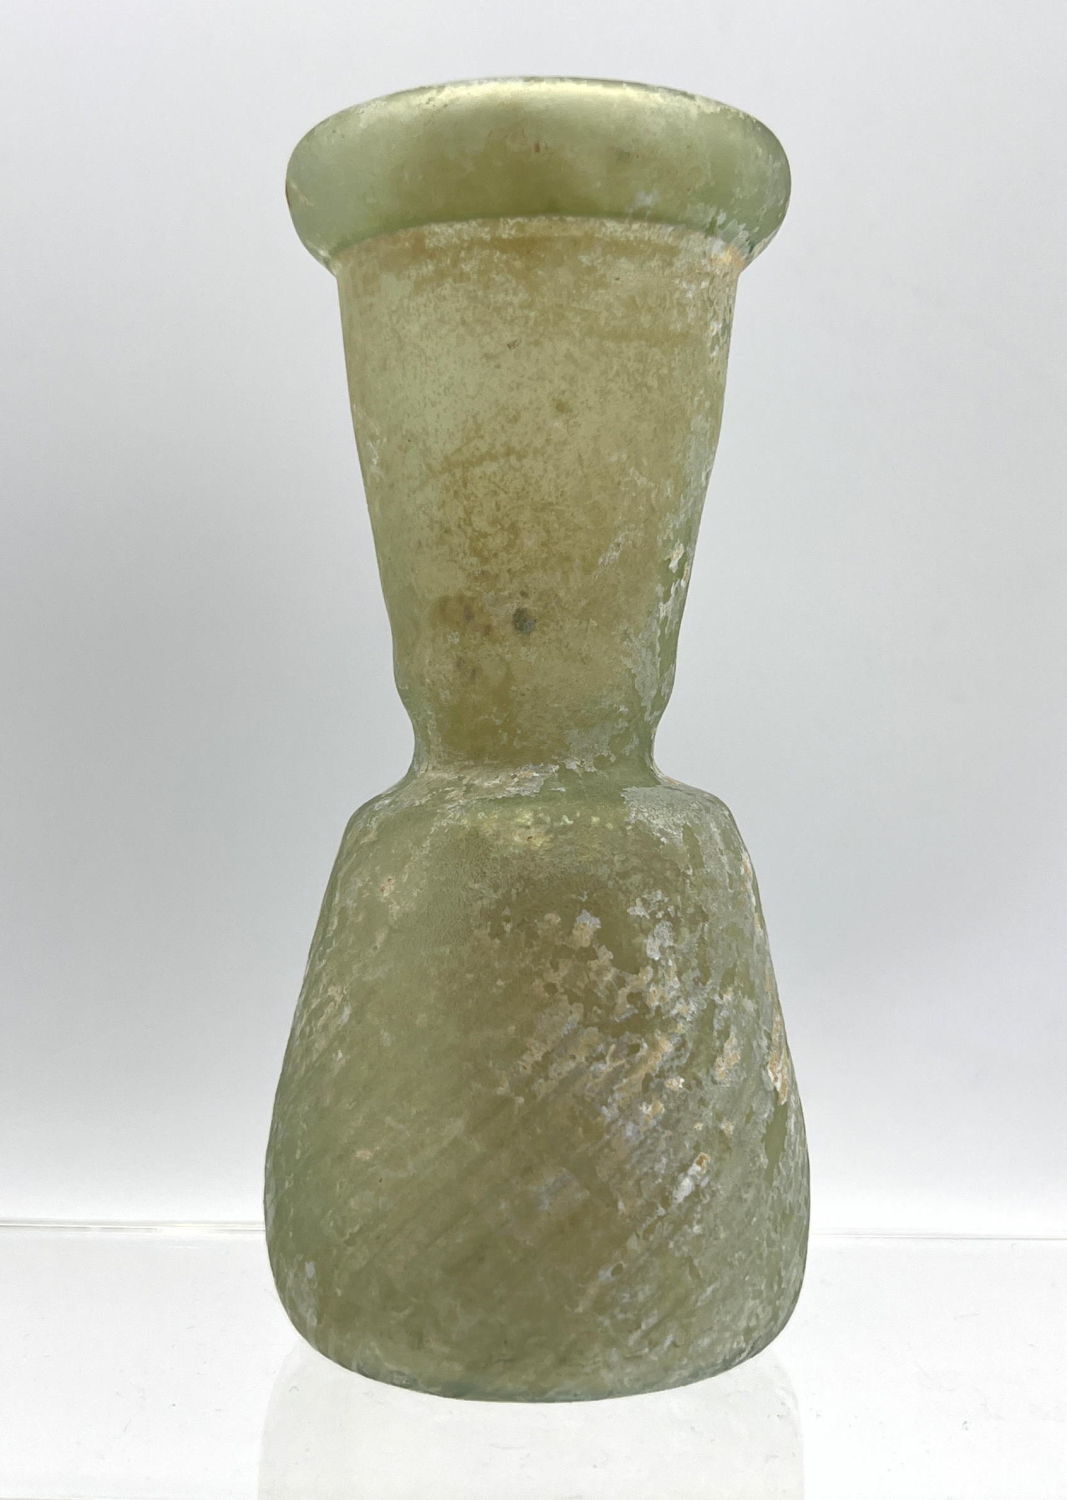 Pale green vessel Ancient Roman 2a6298